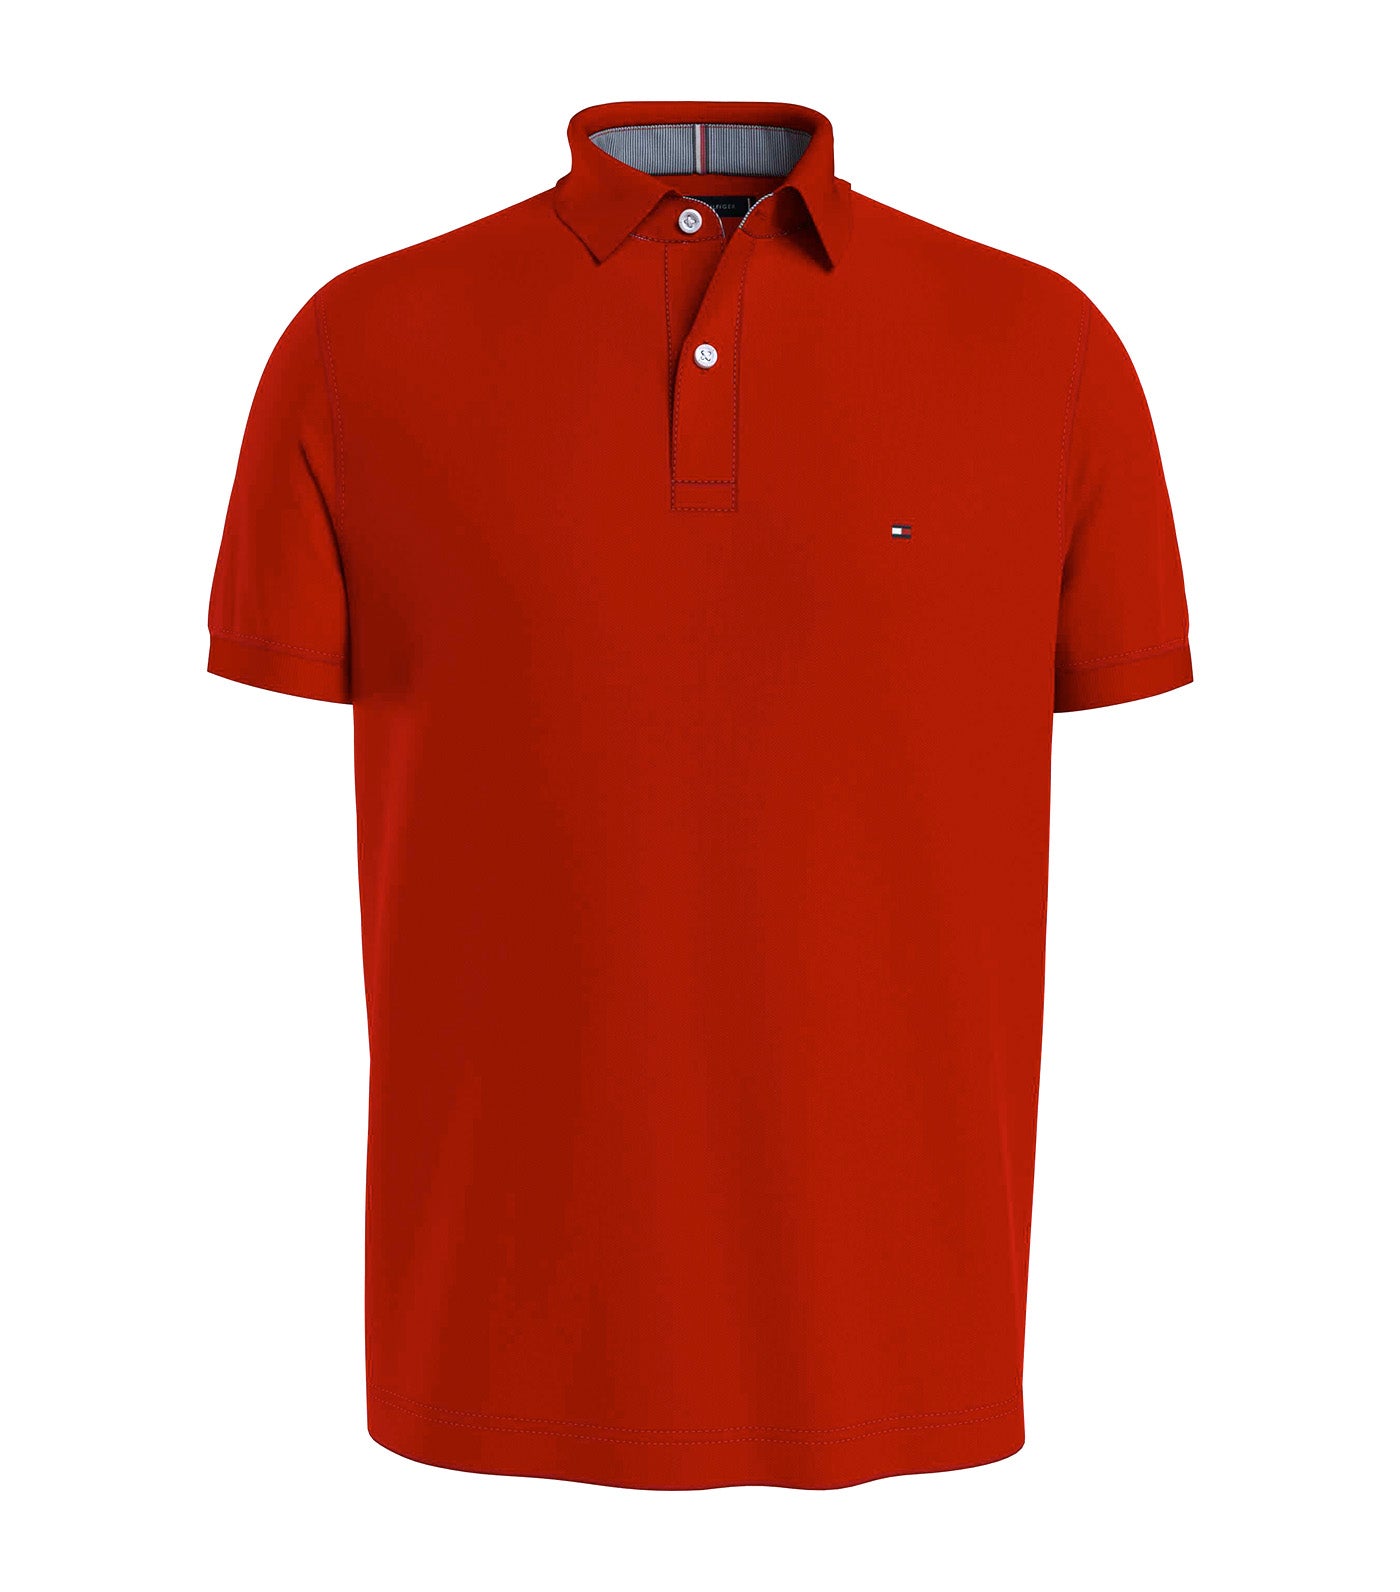 Outlet-Sonderverkauf Tommy Hilfiger Men\'s IM 1985 Red Primary Regular Shirt Polo